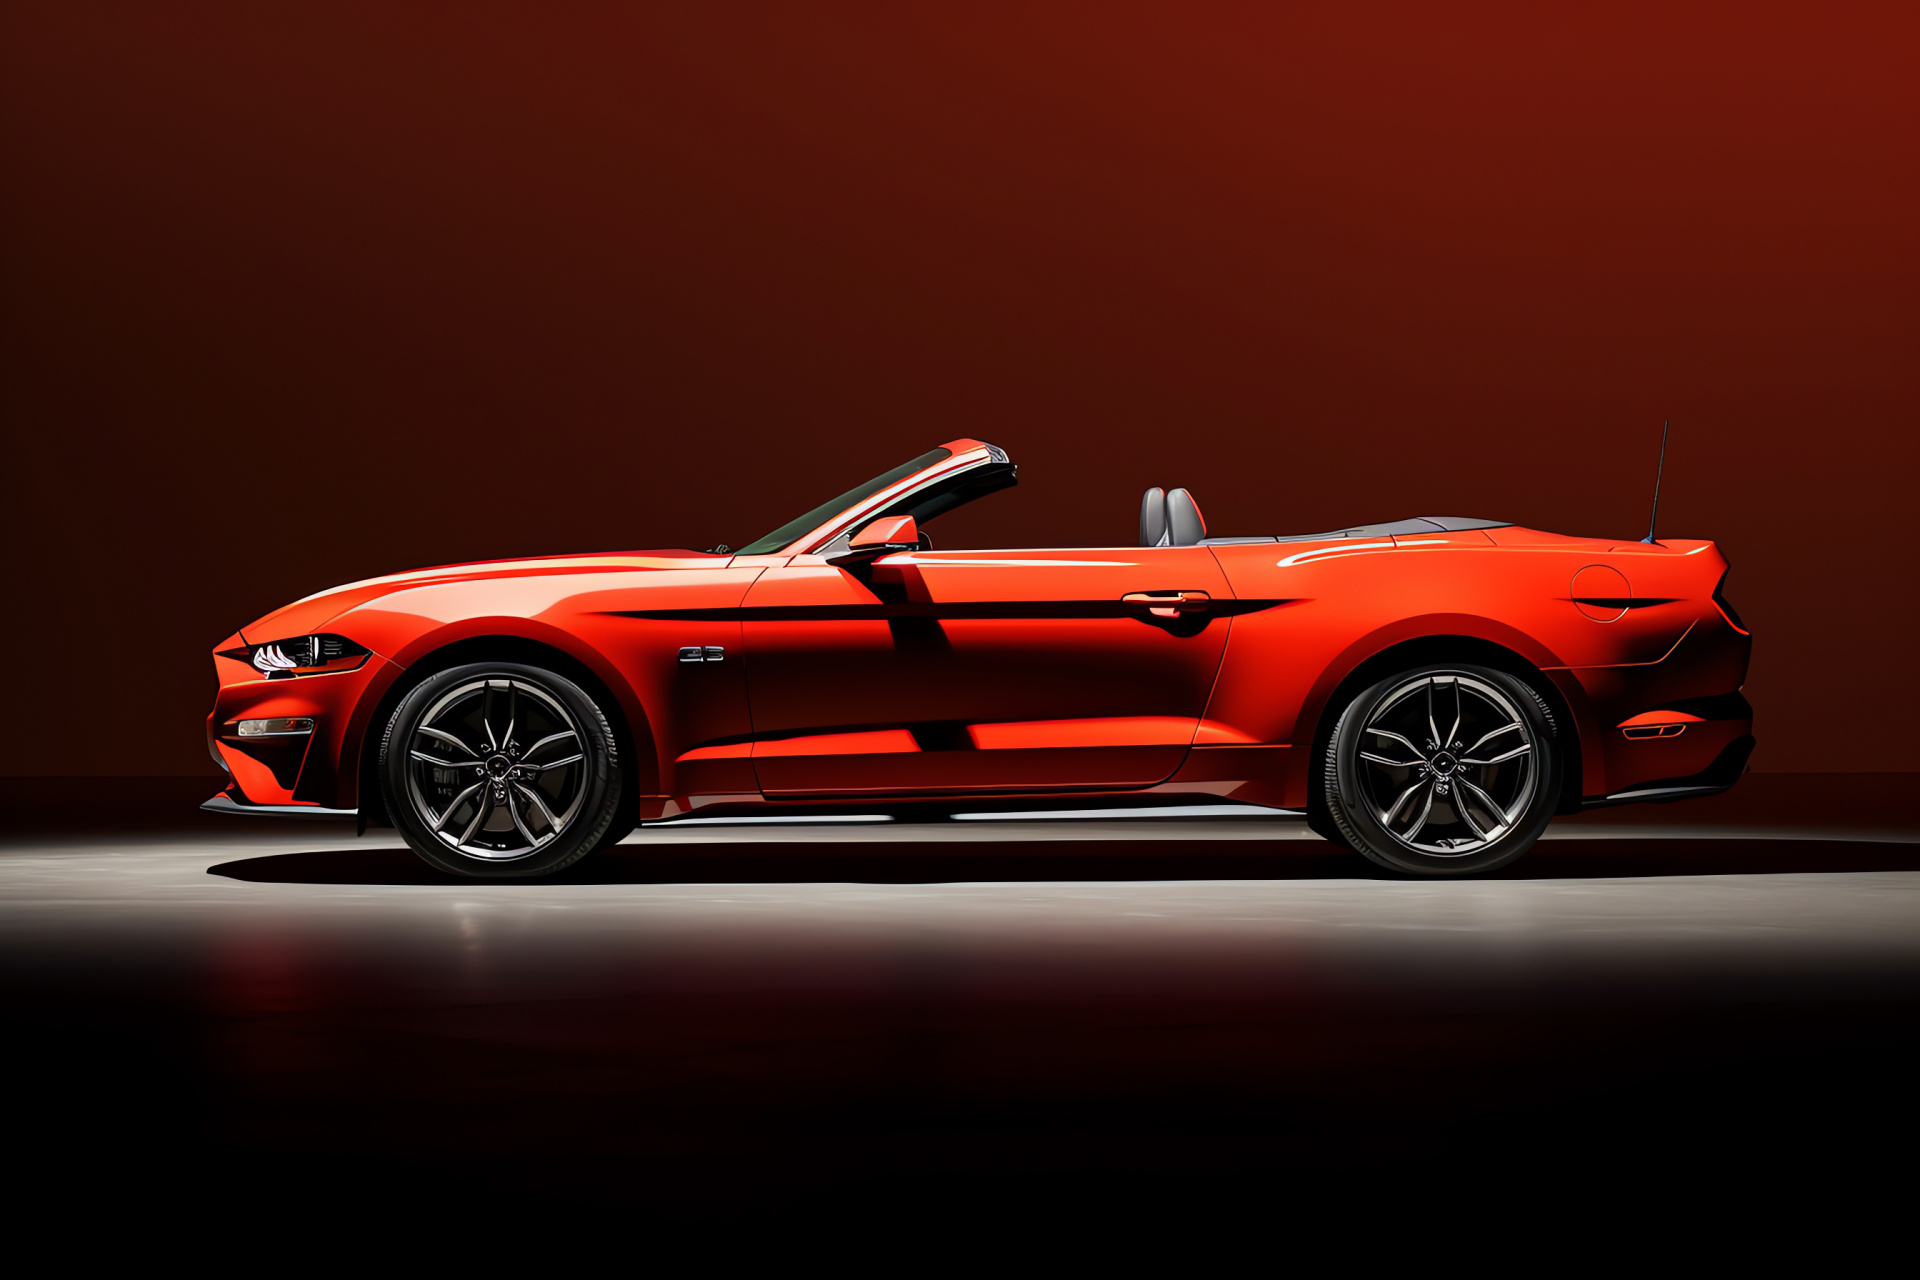 Stylized auto art, Two-tone simplicity, Sleek Mustang profile, Automotive purity, Car design lines, HD Desktop Image